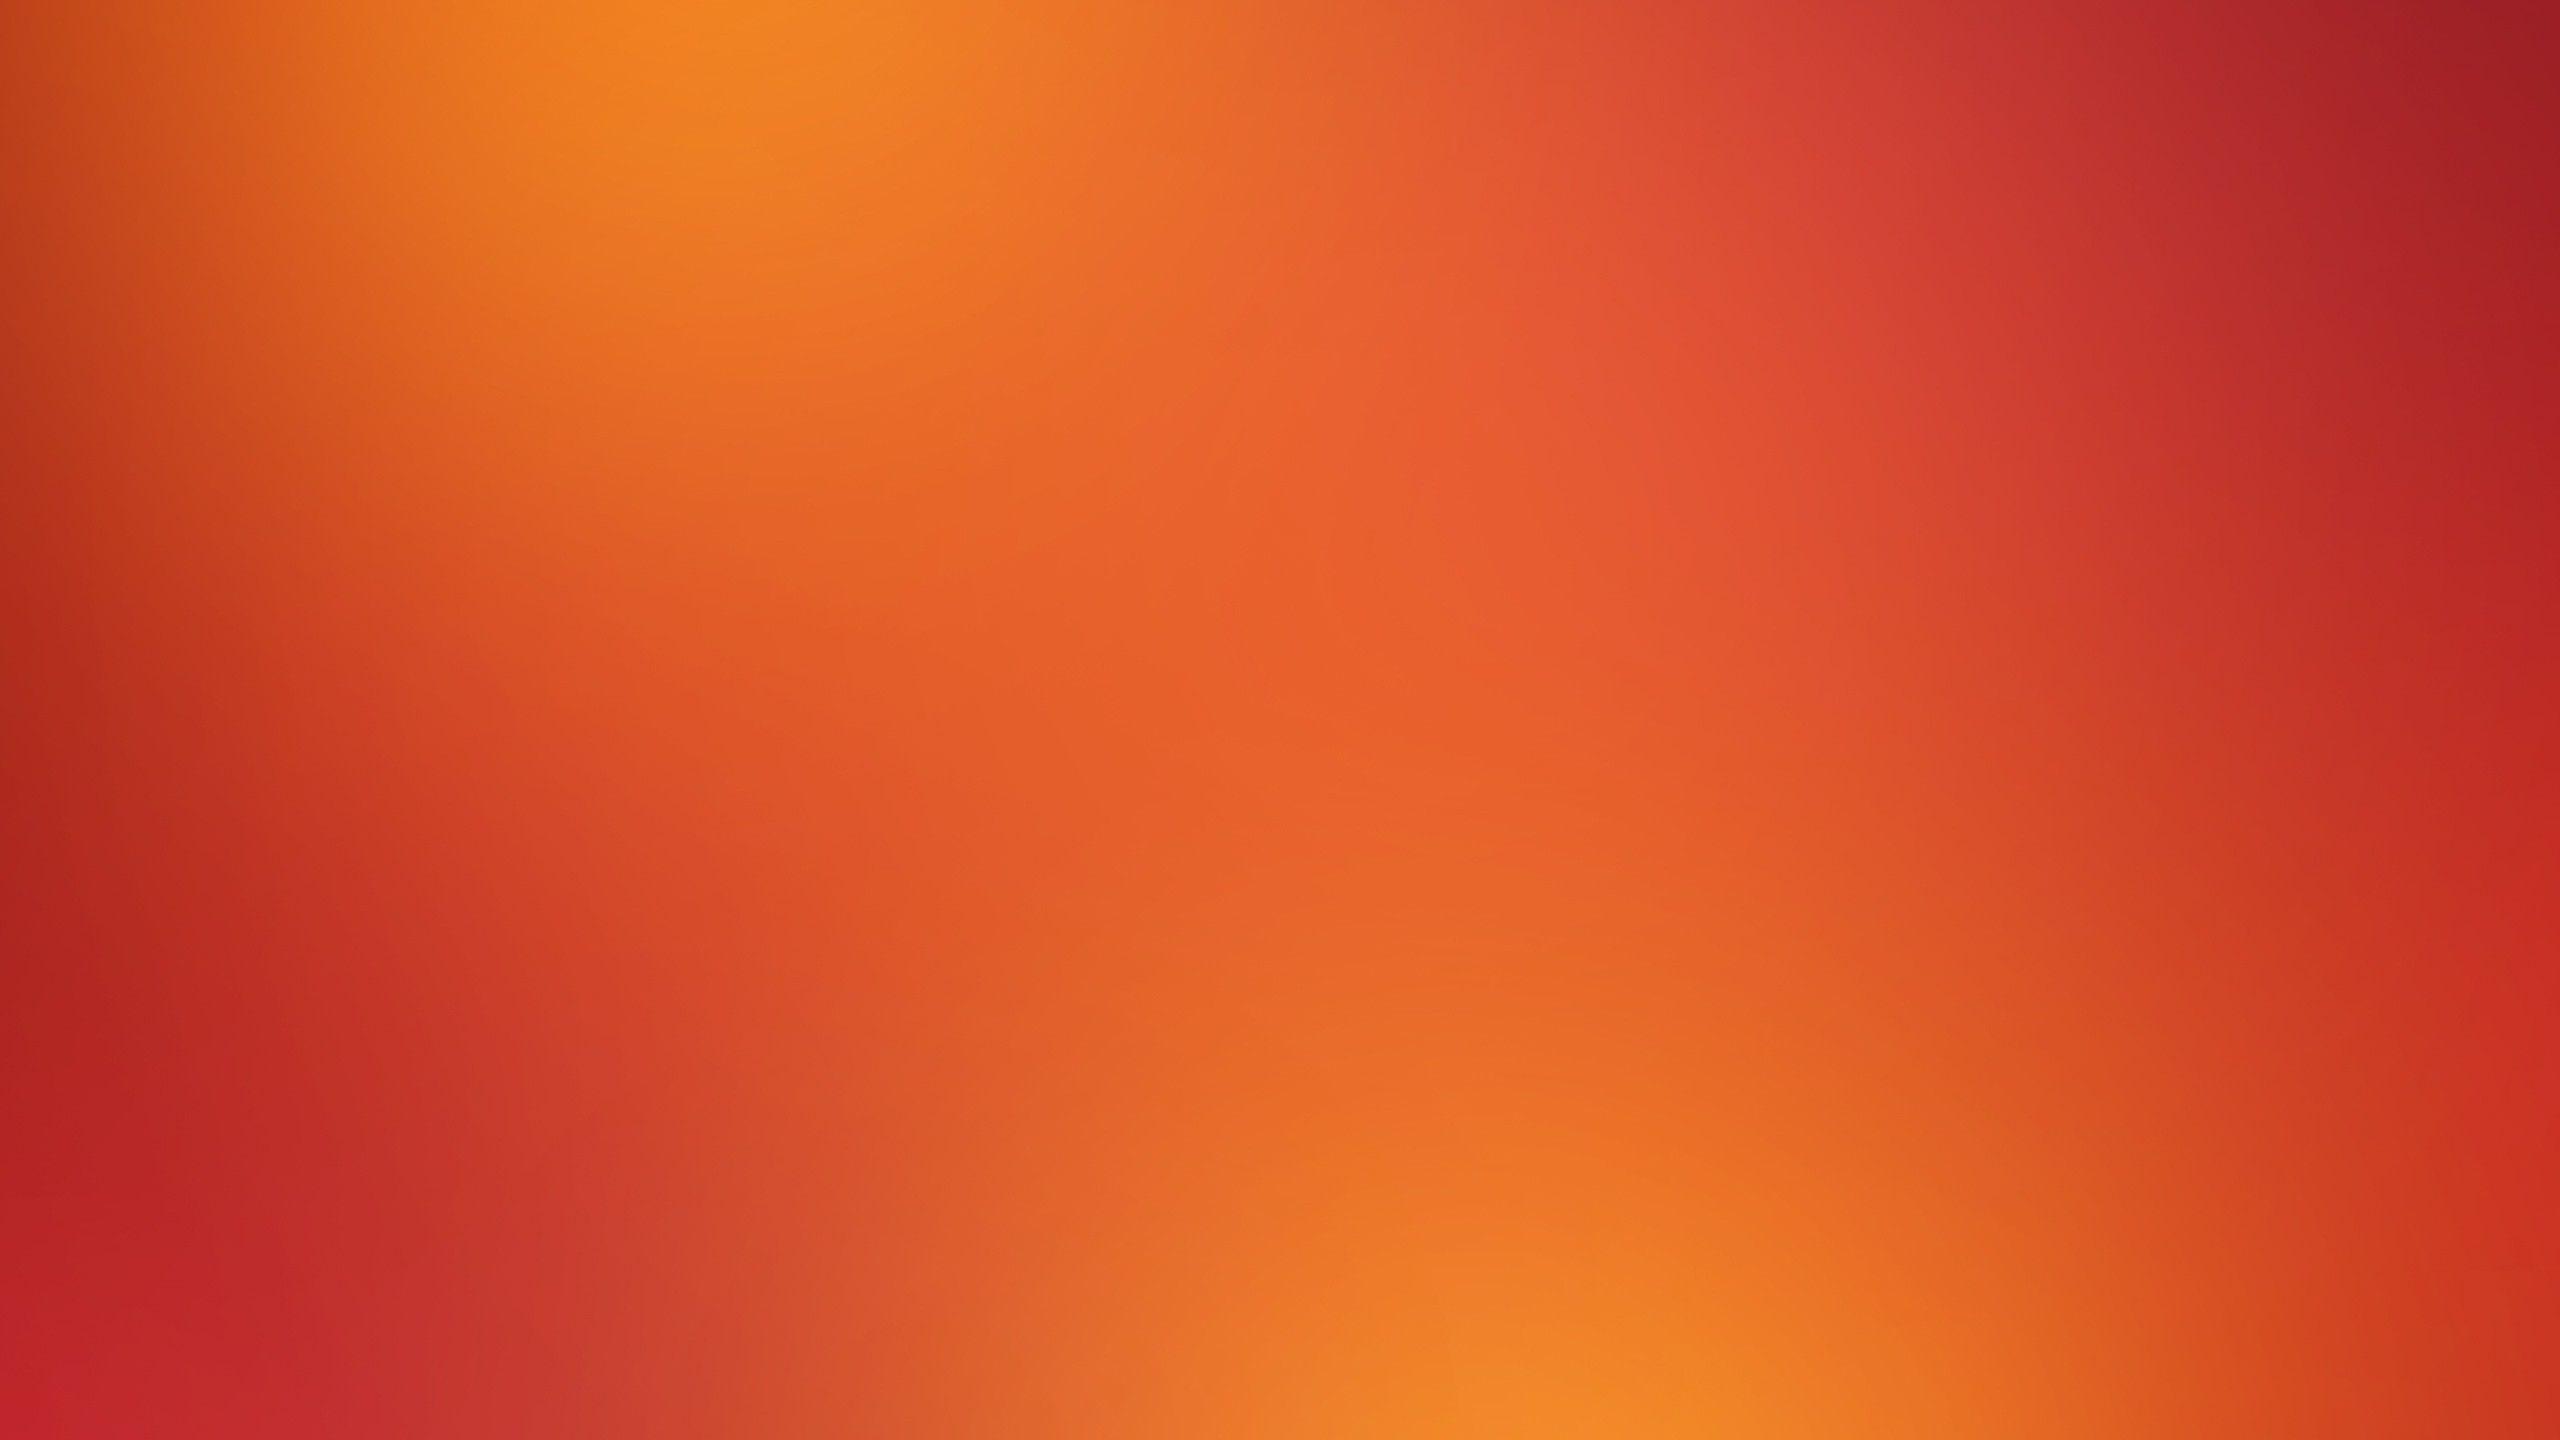 Compartir 126+ imagen red and orange background - Thcshoanghoatham ...